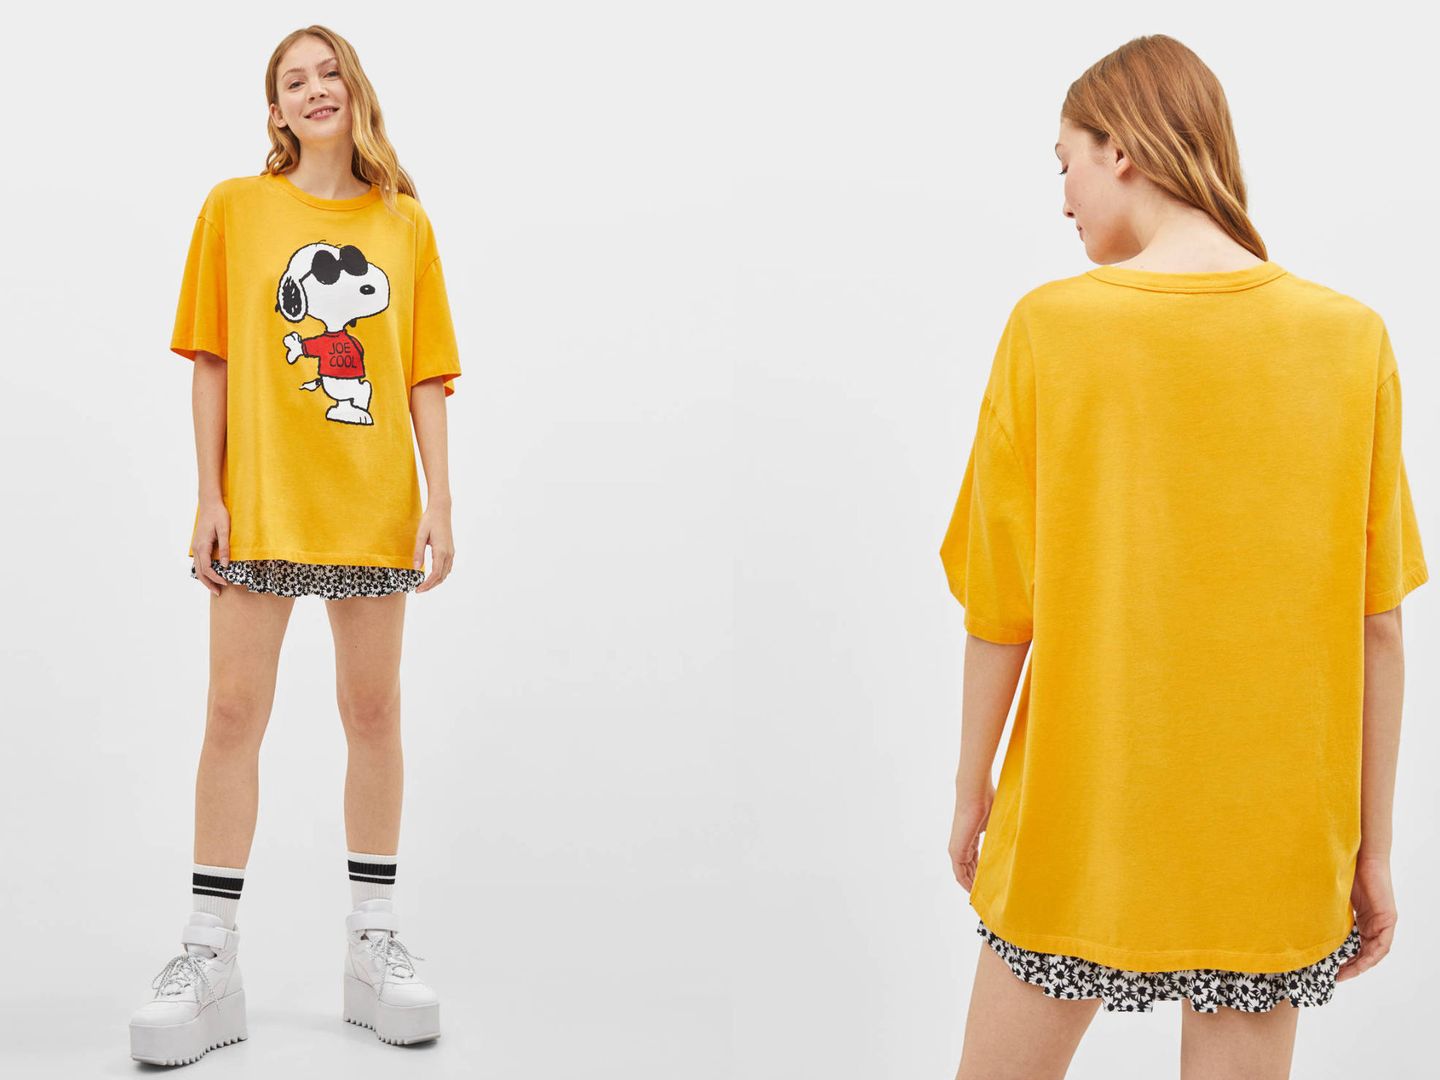 Camiseta oversize de Snoopy en Bershka (15,99 euros).